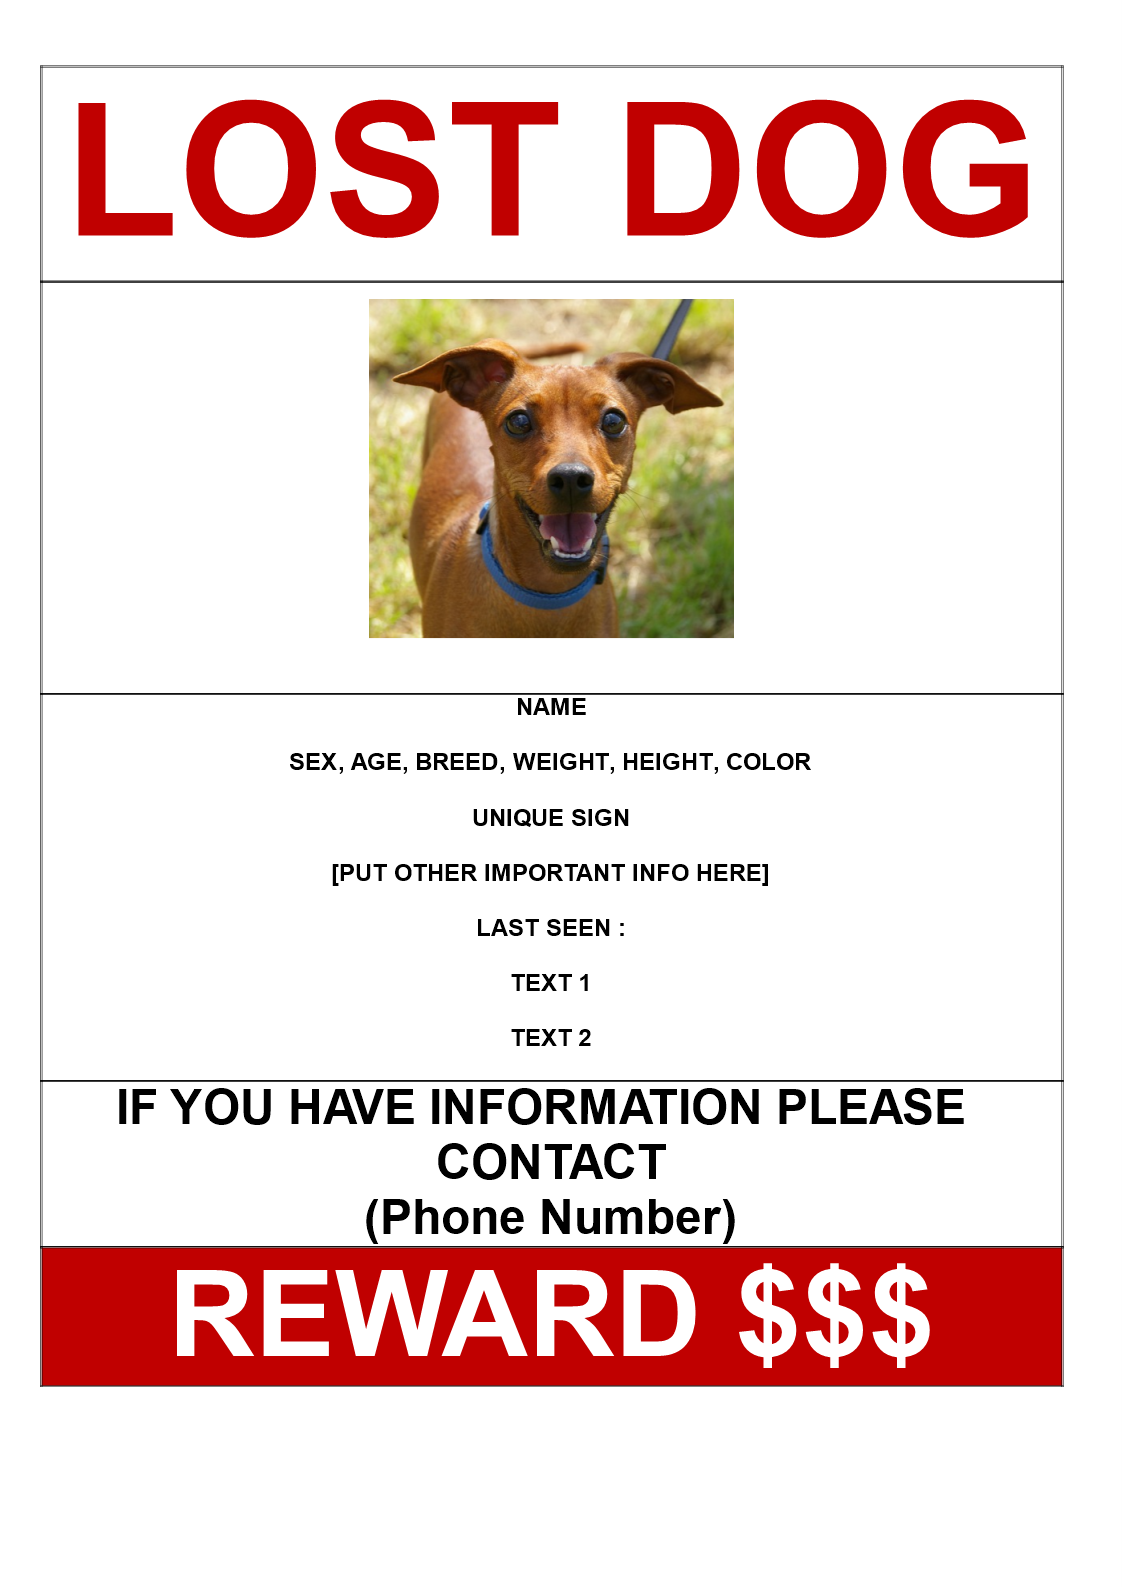 missing dog poster with reward a3 size plantilla imagen principal